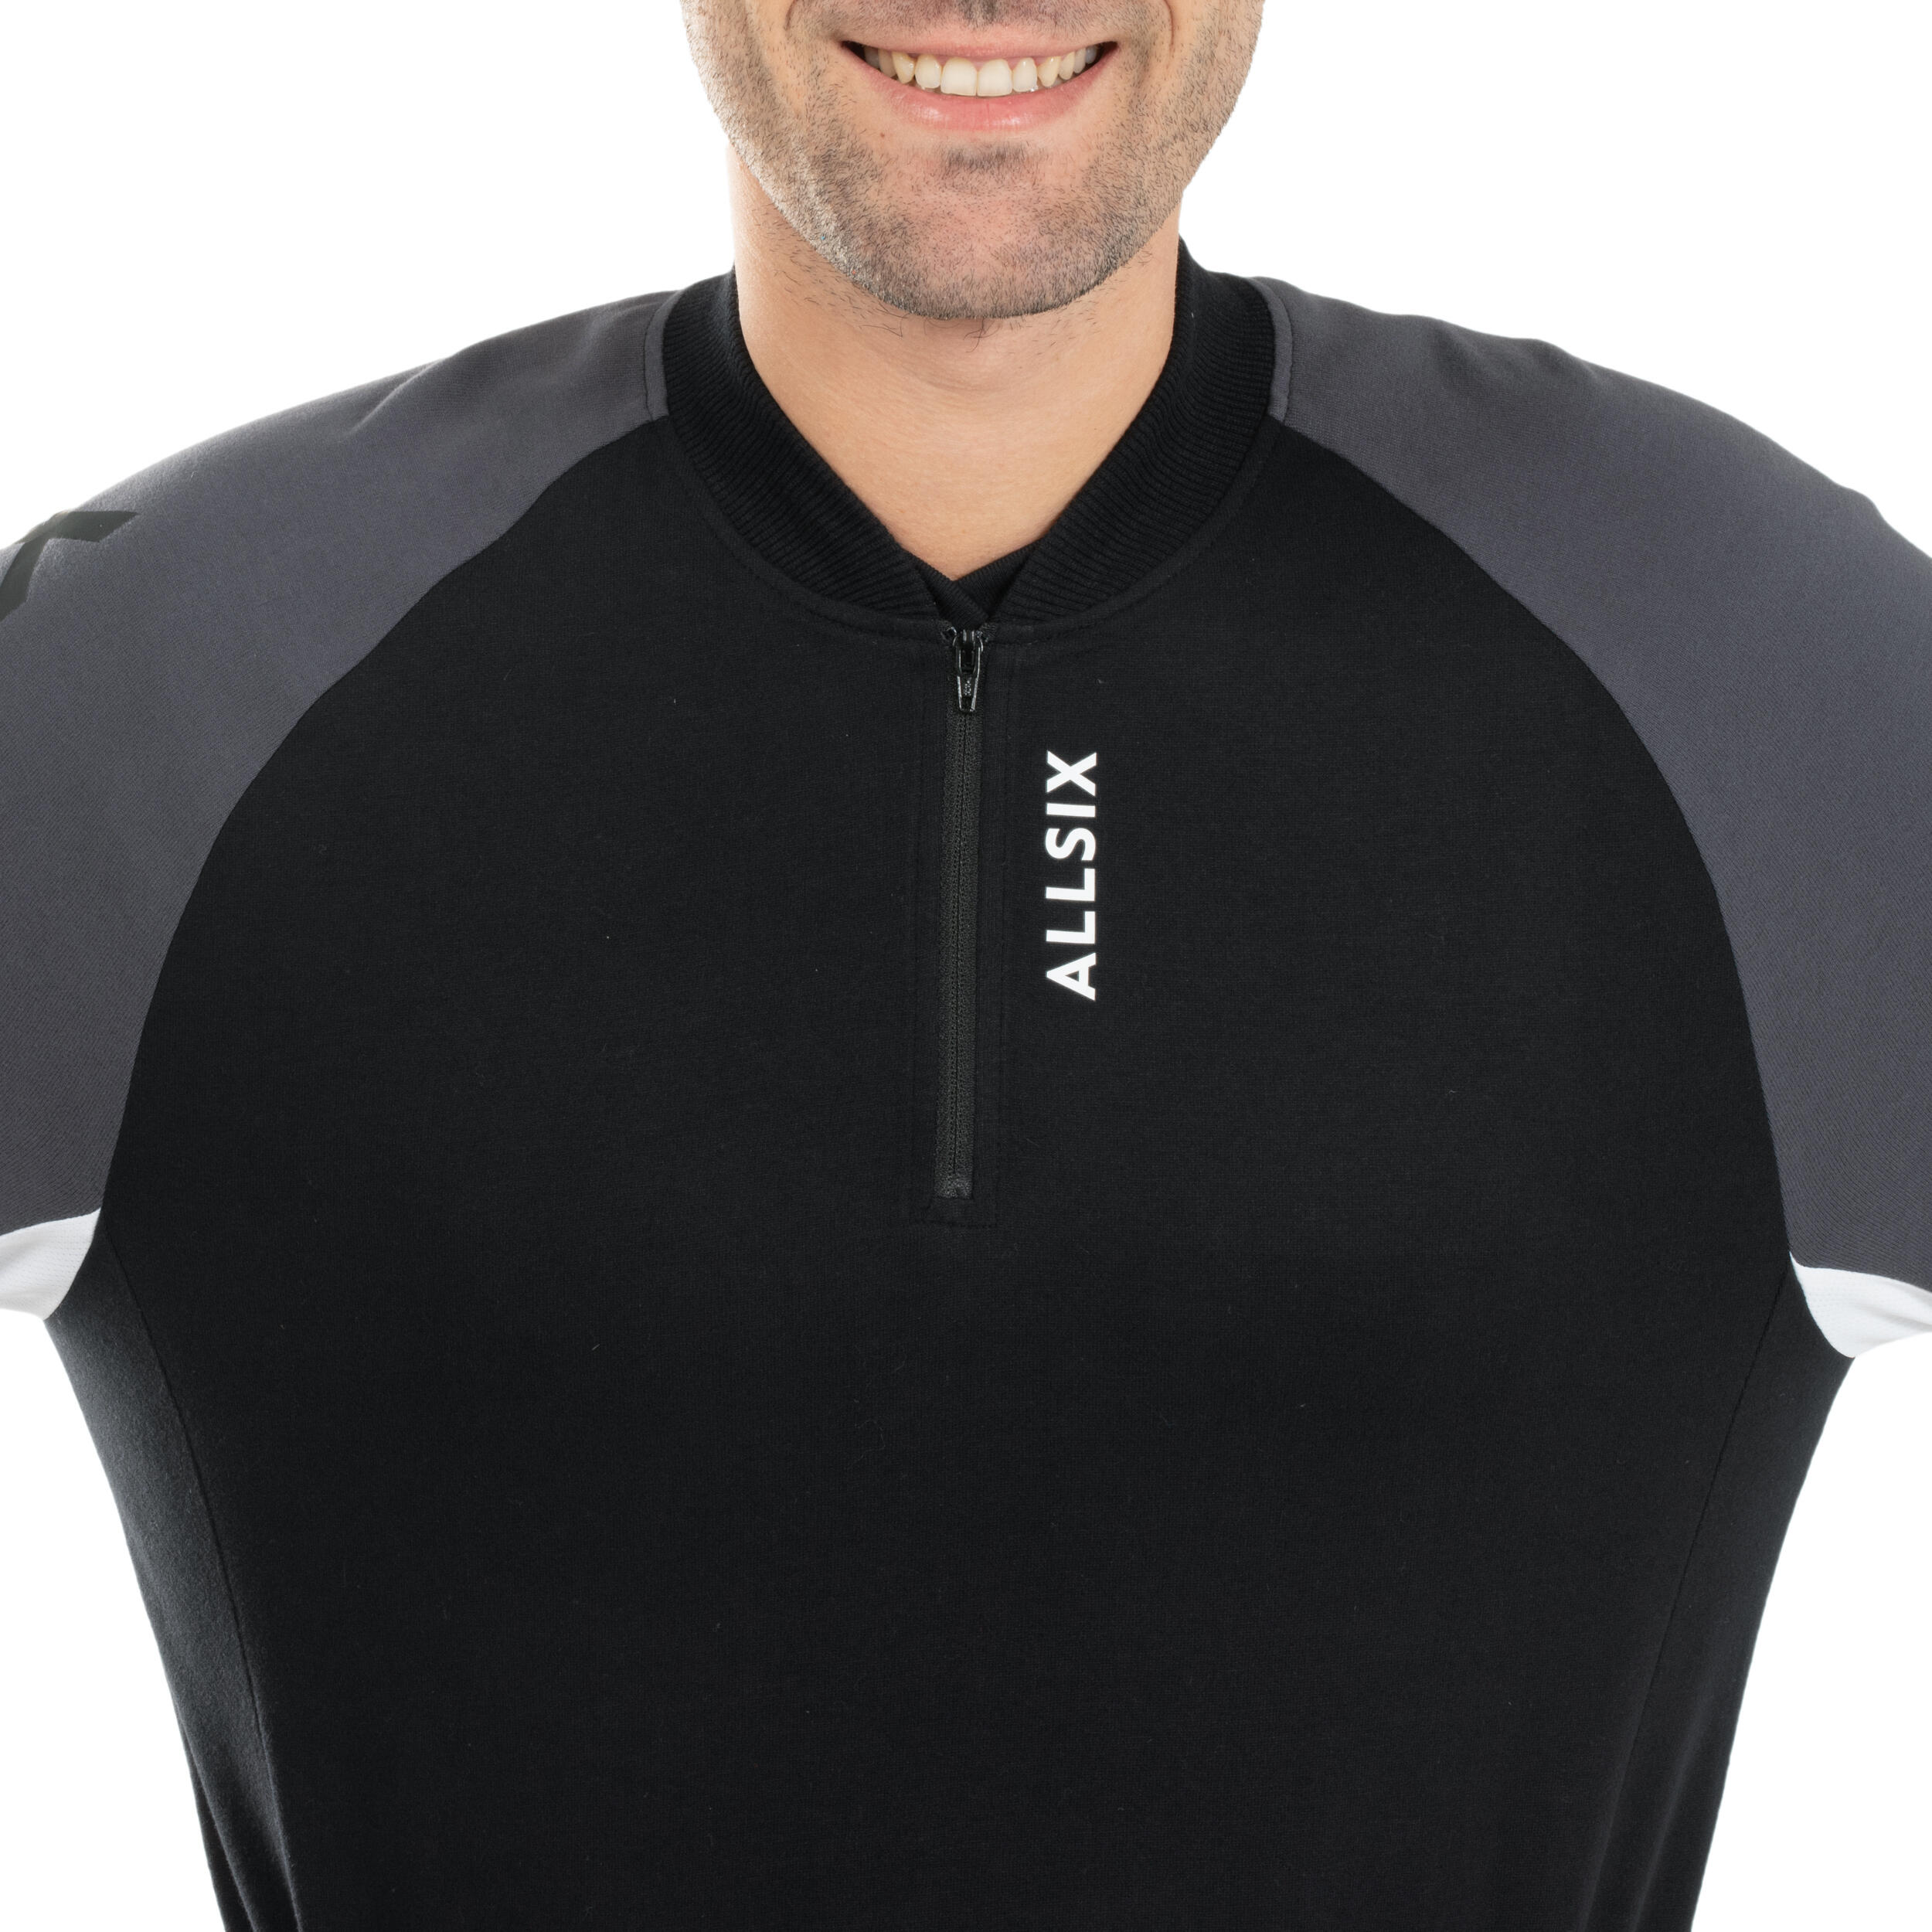 Men's Volleyball Jacket - Black/Grey 5/7